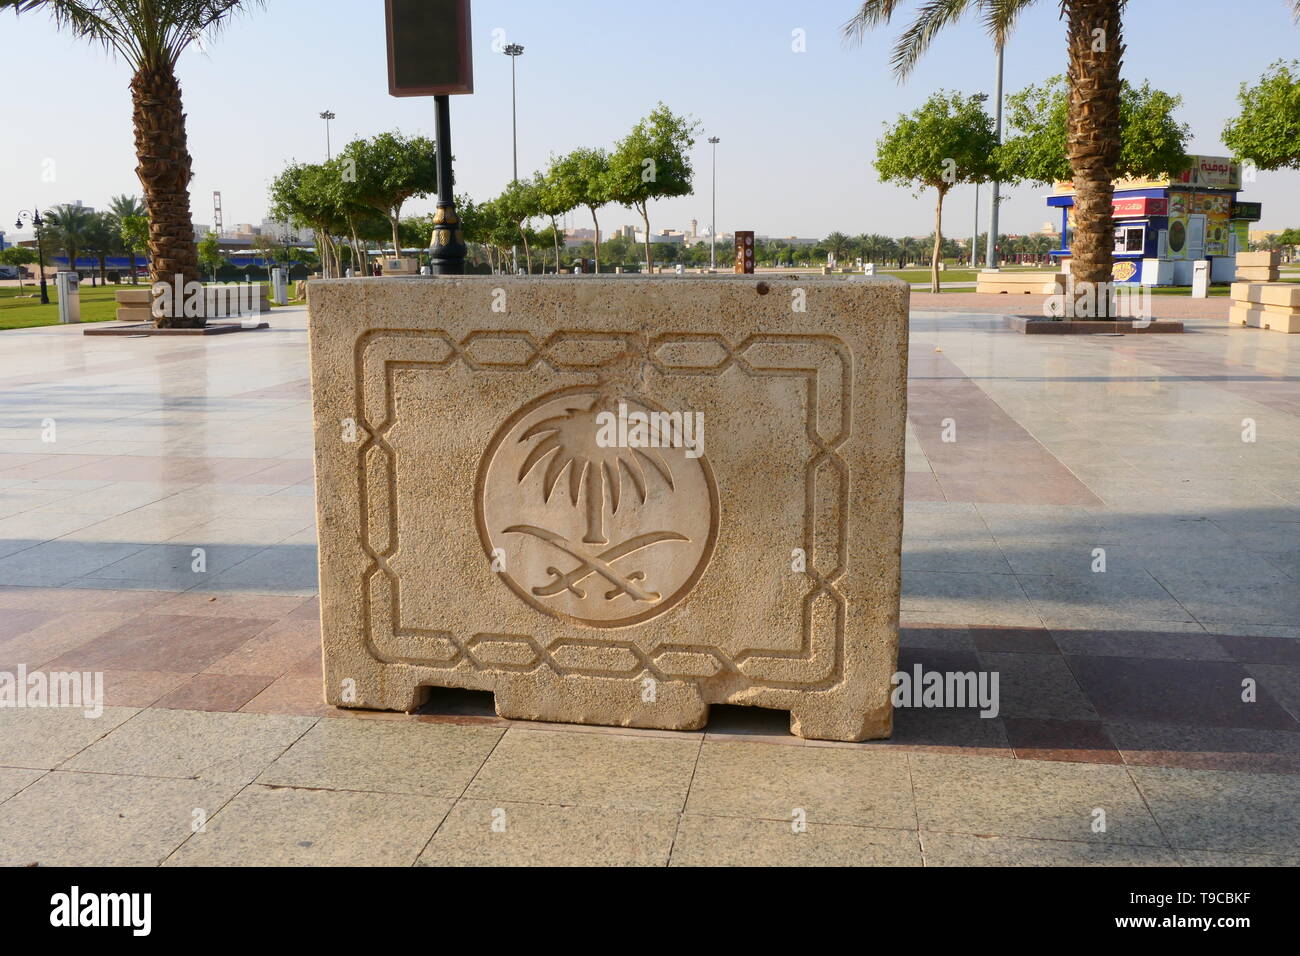 King Abdullah Park in Riyadh, Saudi Arabia Stock Photo